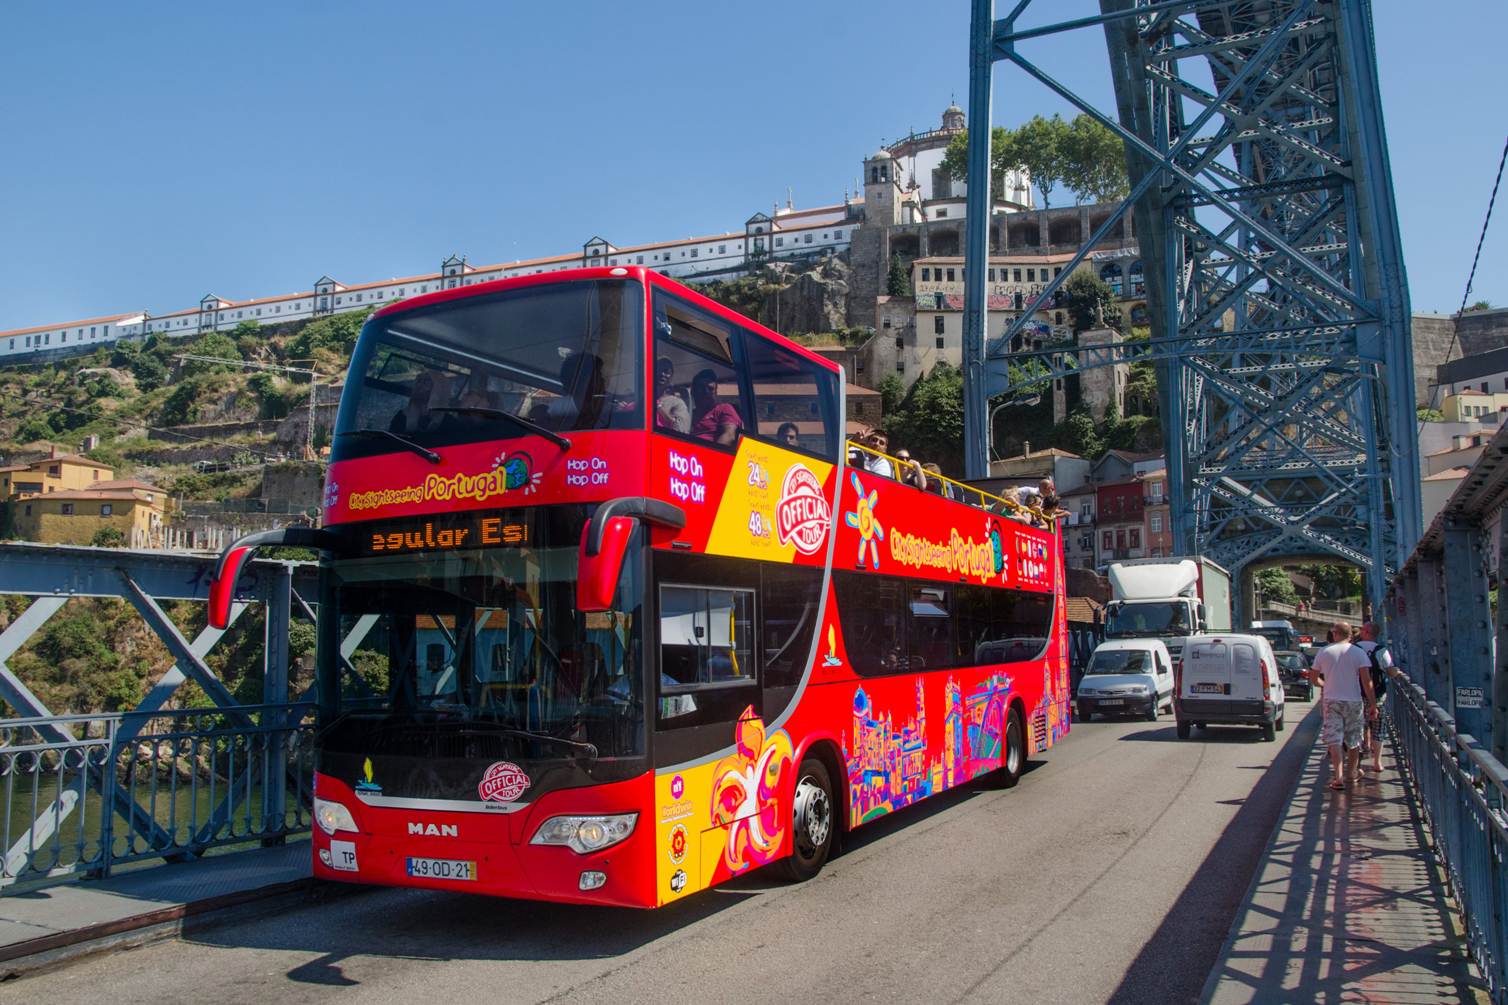 Douro Acima - Transport company